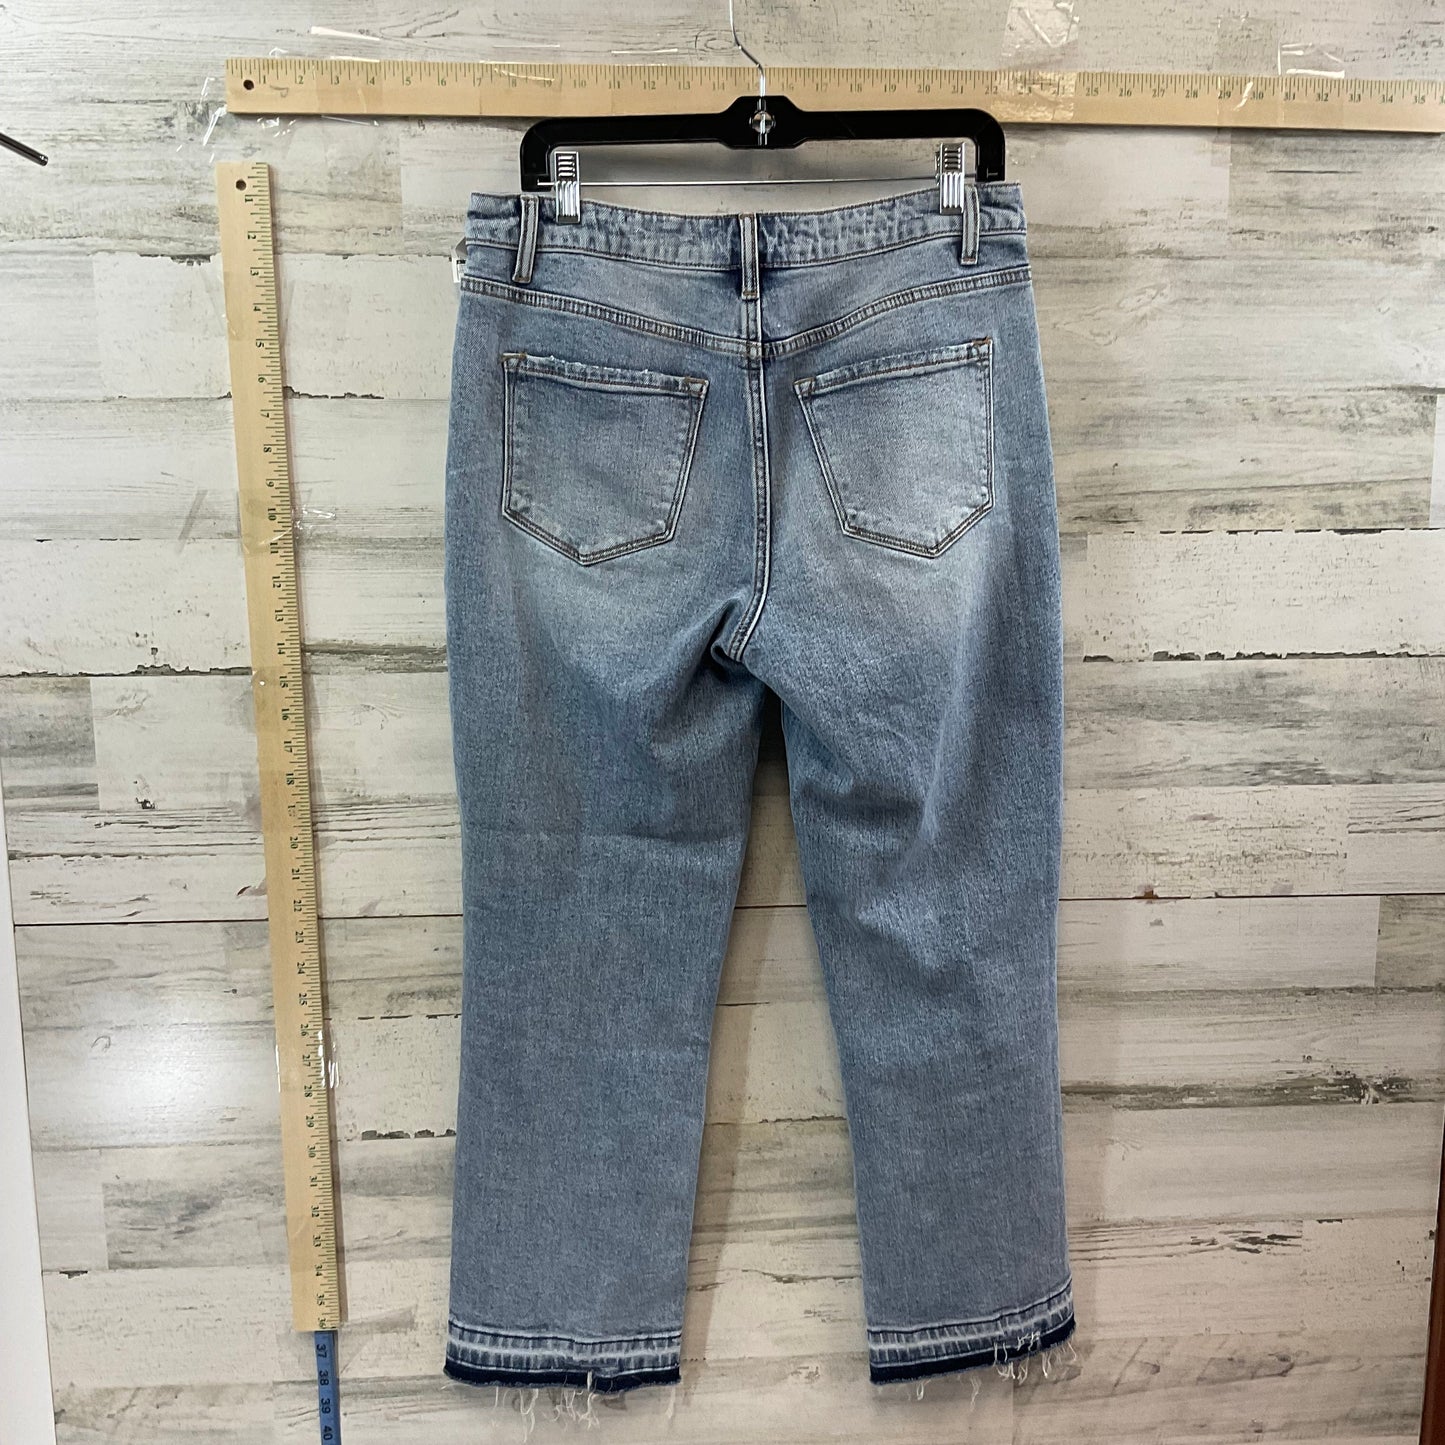 Jeans Straight By VERVET Size: 8